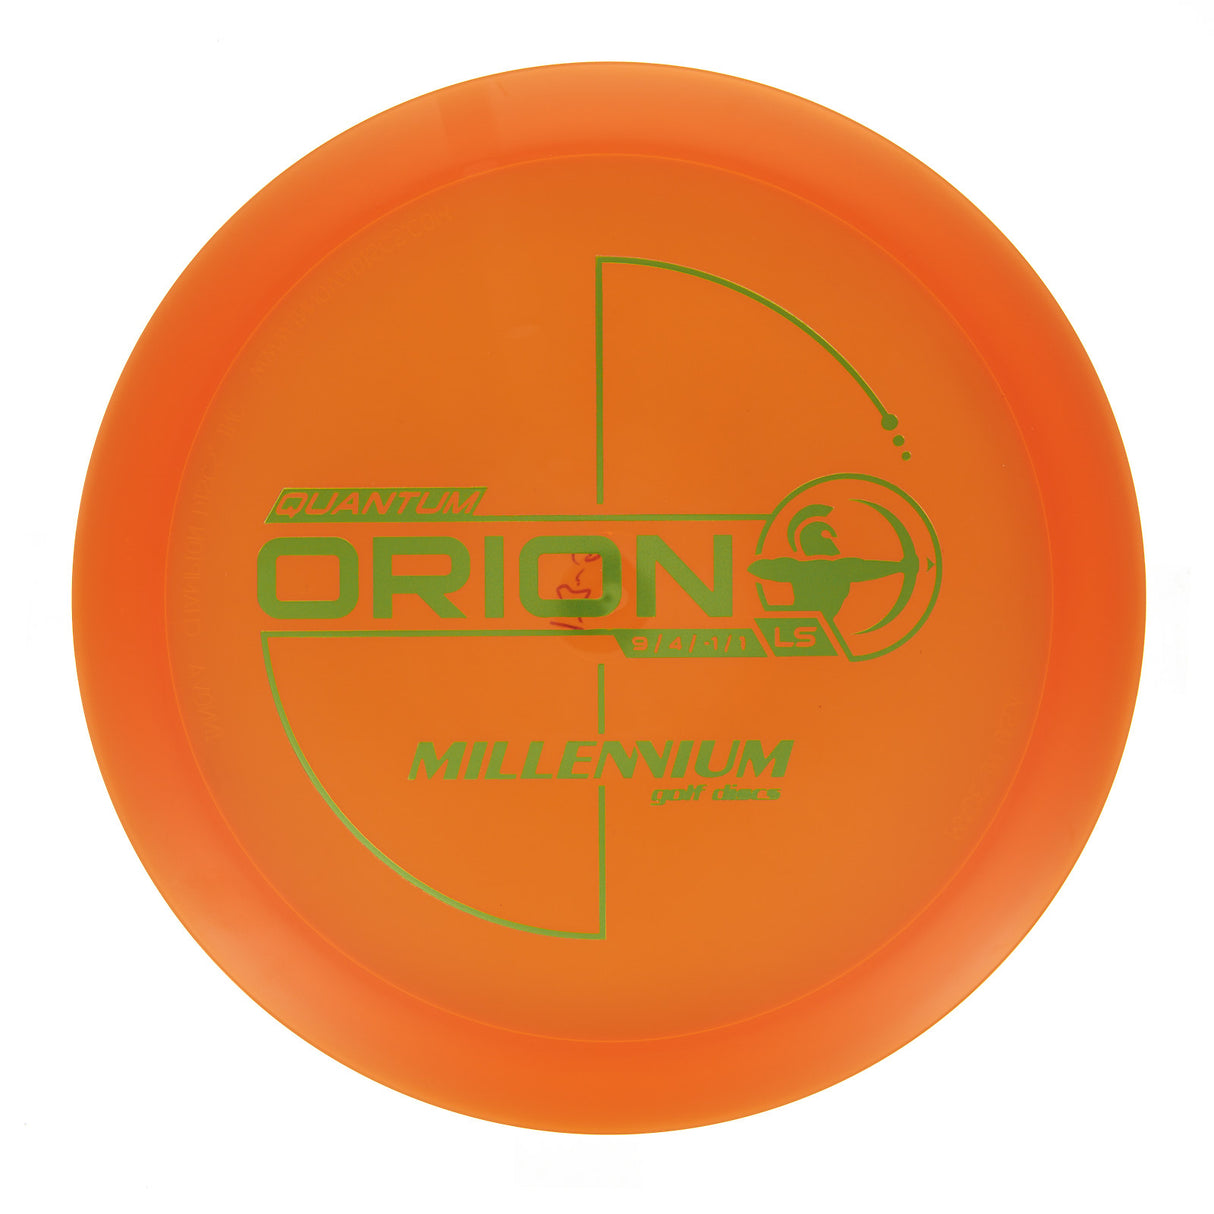 Millennium Orion LS - Quantum  175g | Style 0001